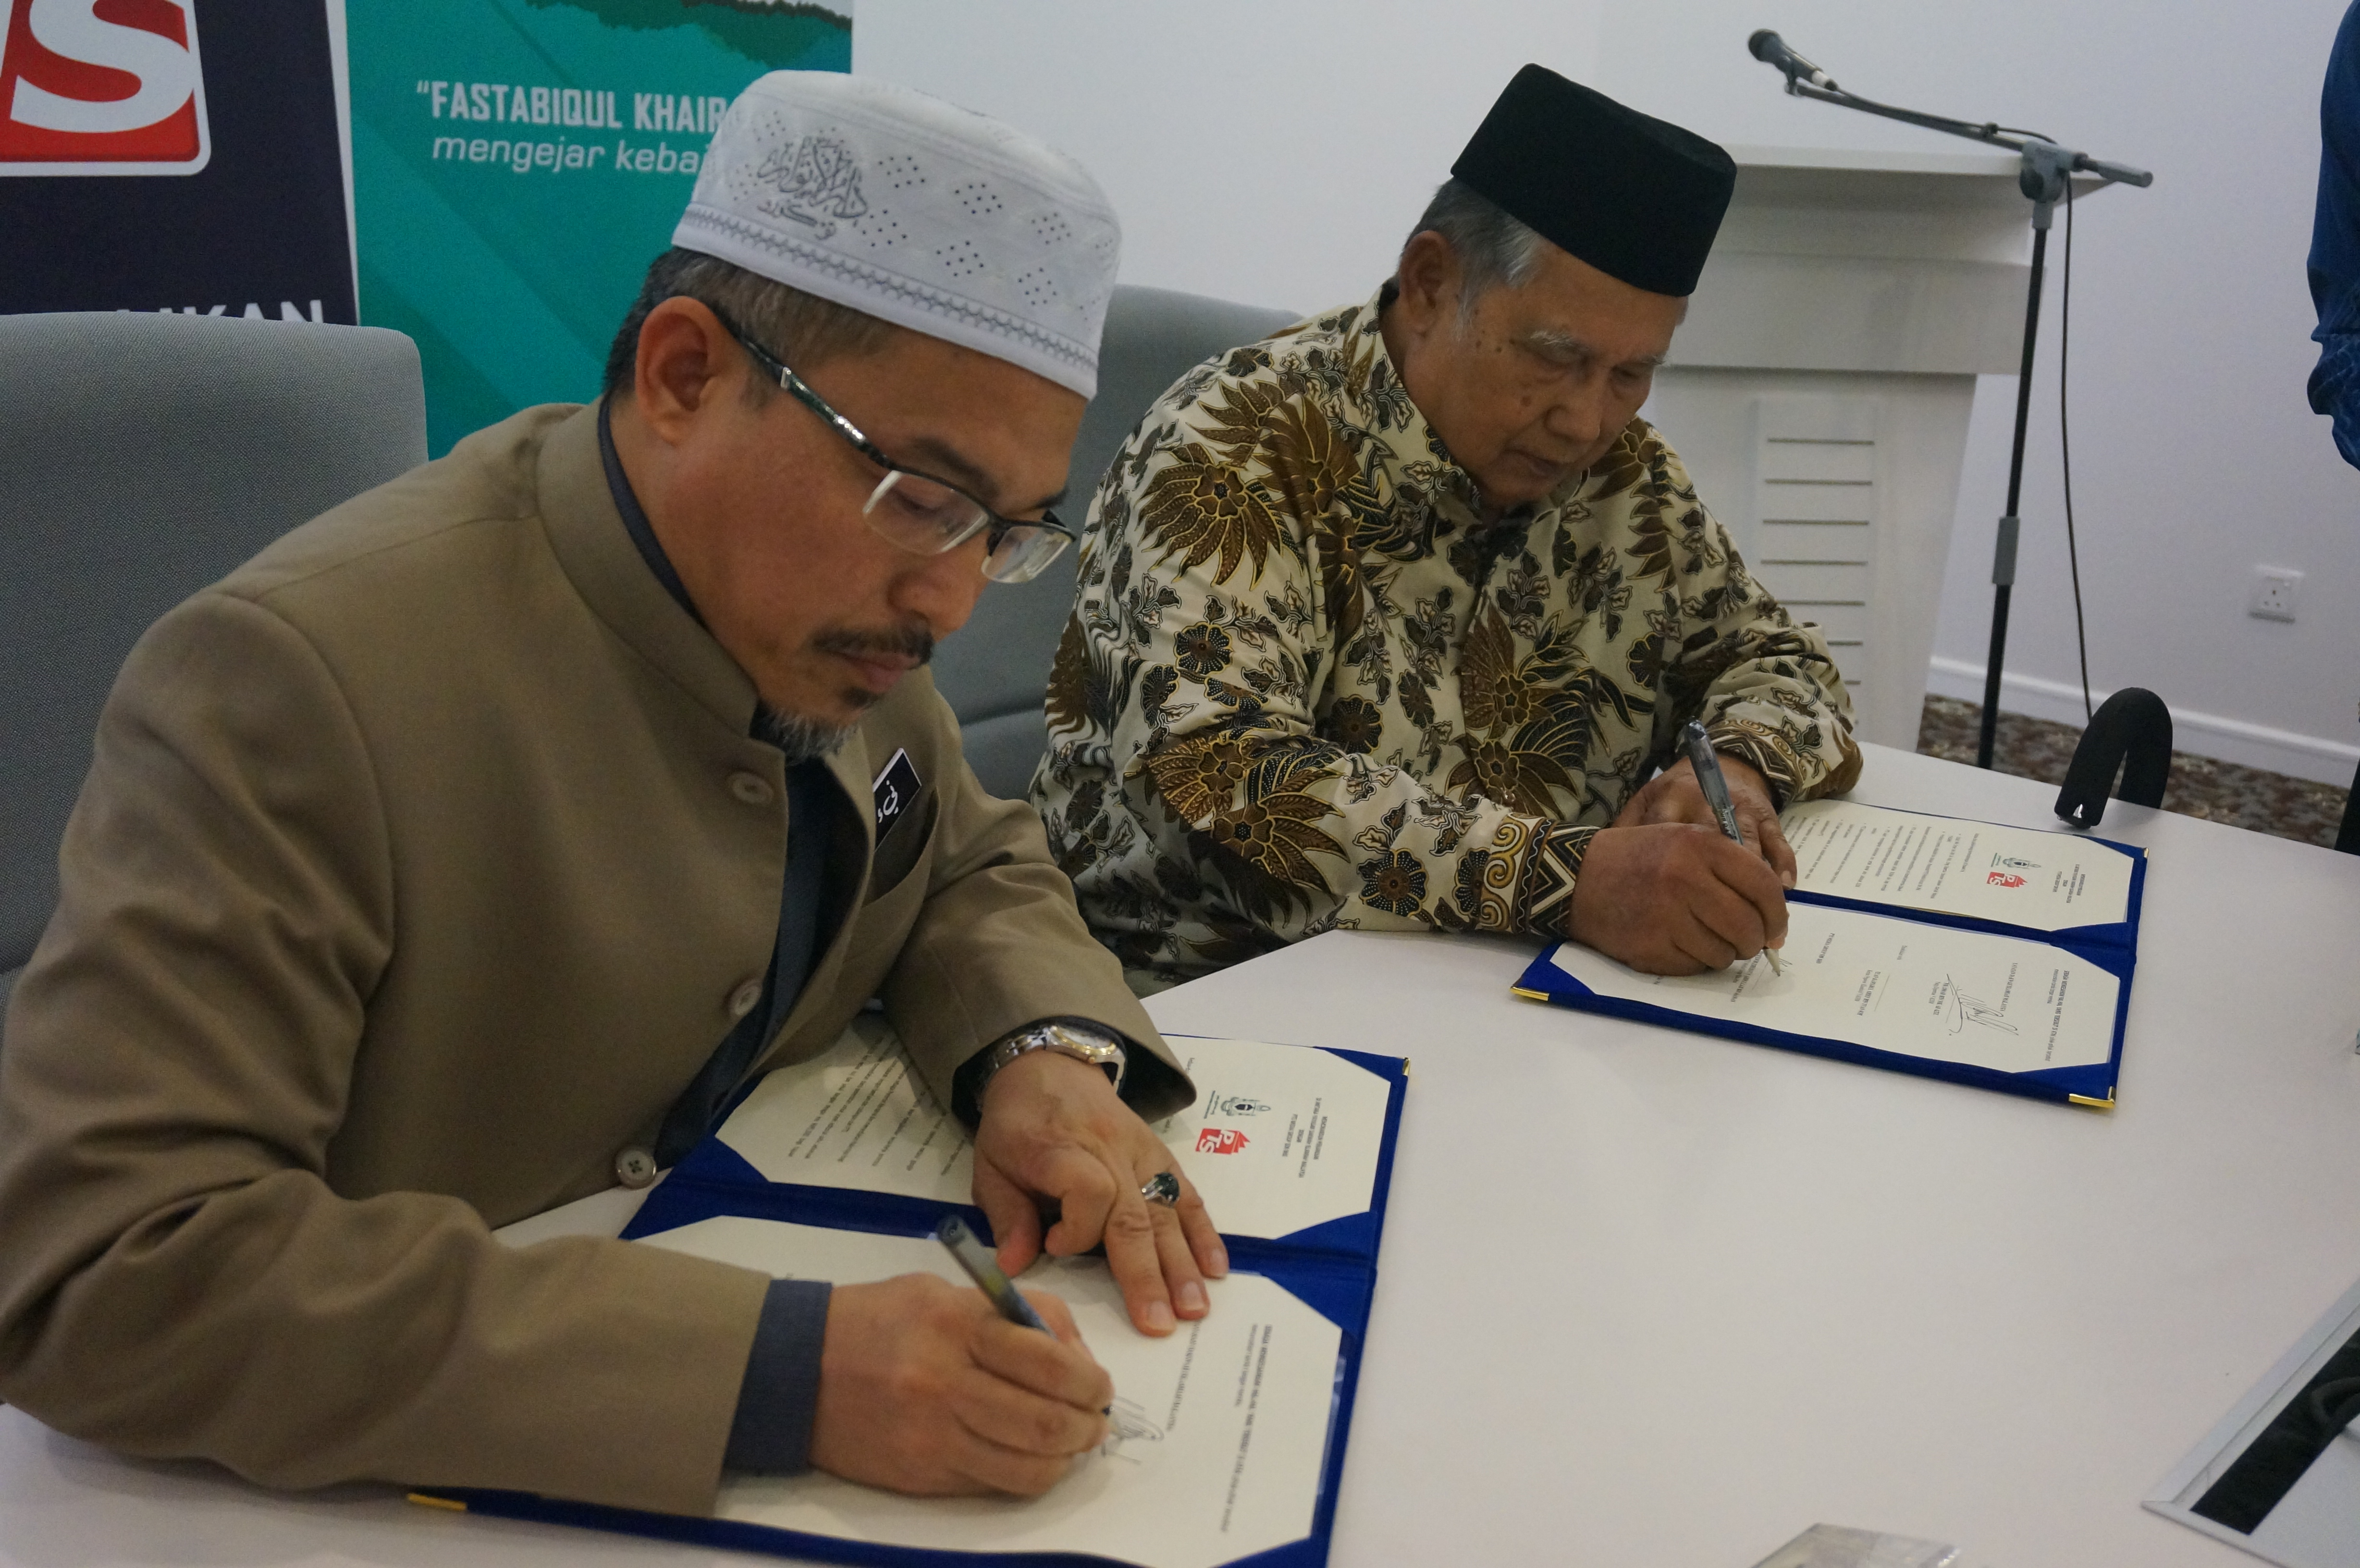 Memorandum perjanjian ditandatangan oleh Ustaz Nik Omar dan Prof. Emeritus Abdullah Hassan